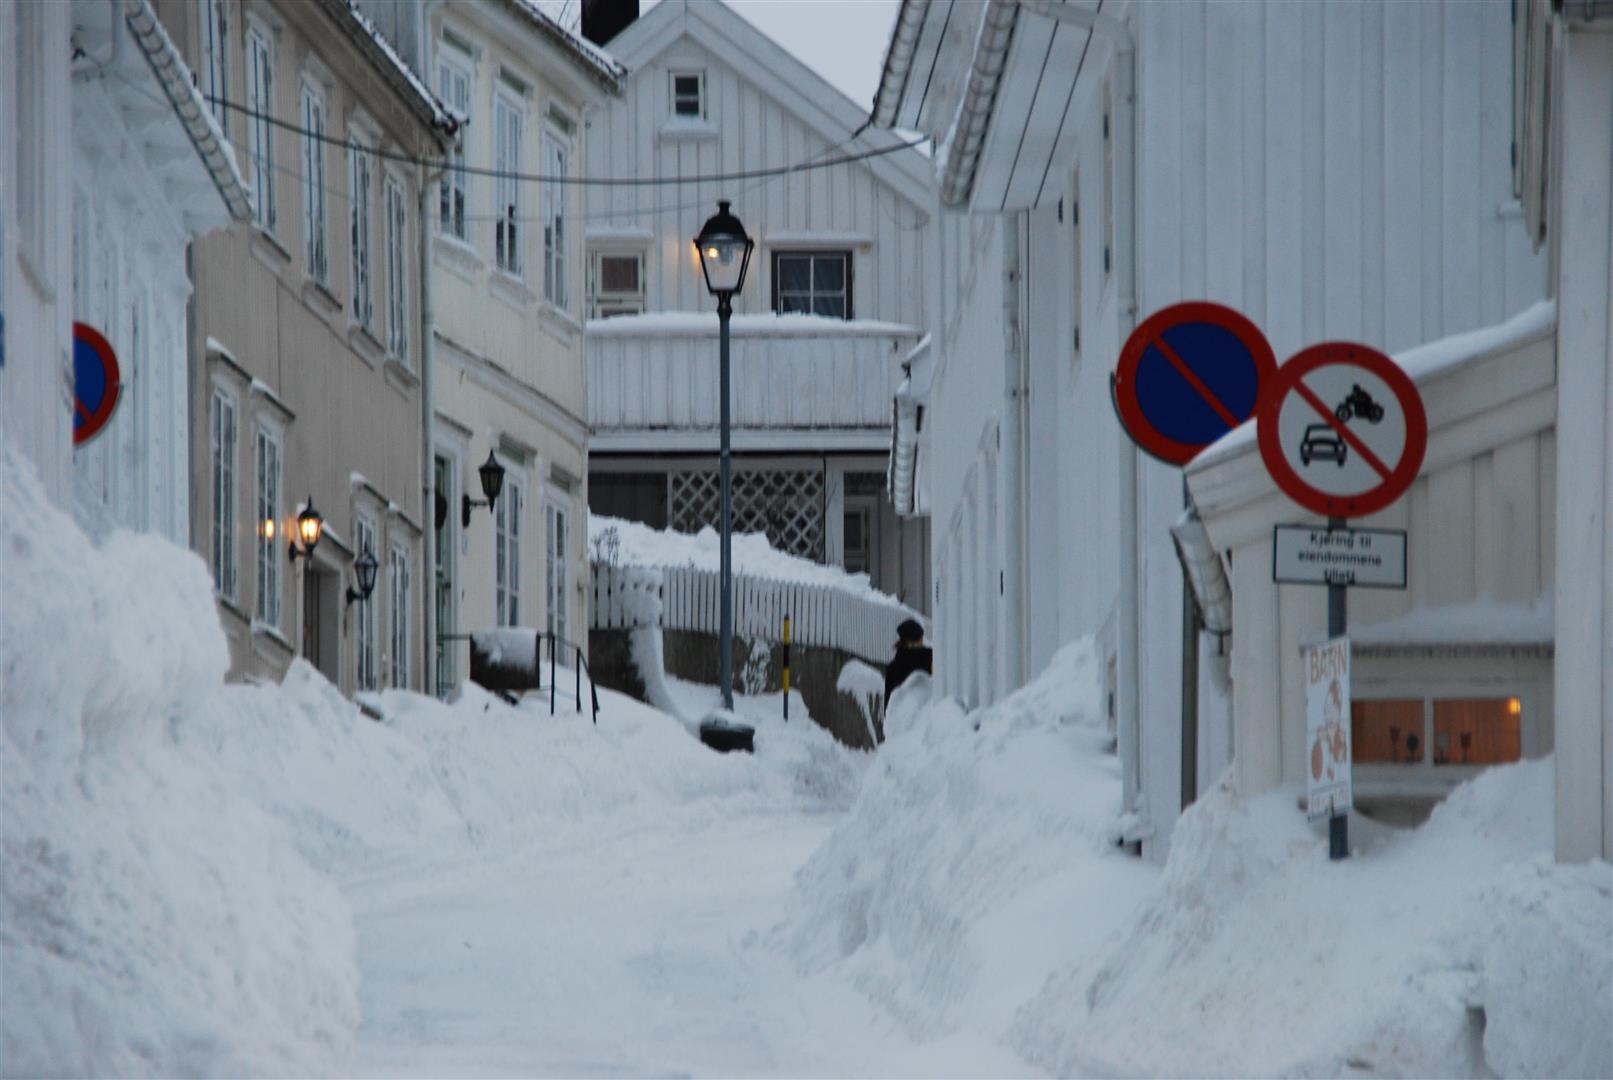 Bilder fra Grimstad - Grimstad kommune